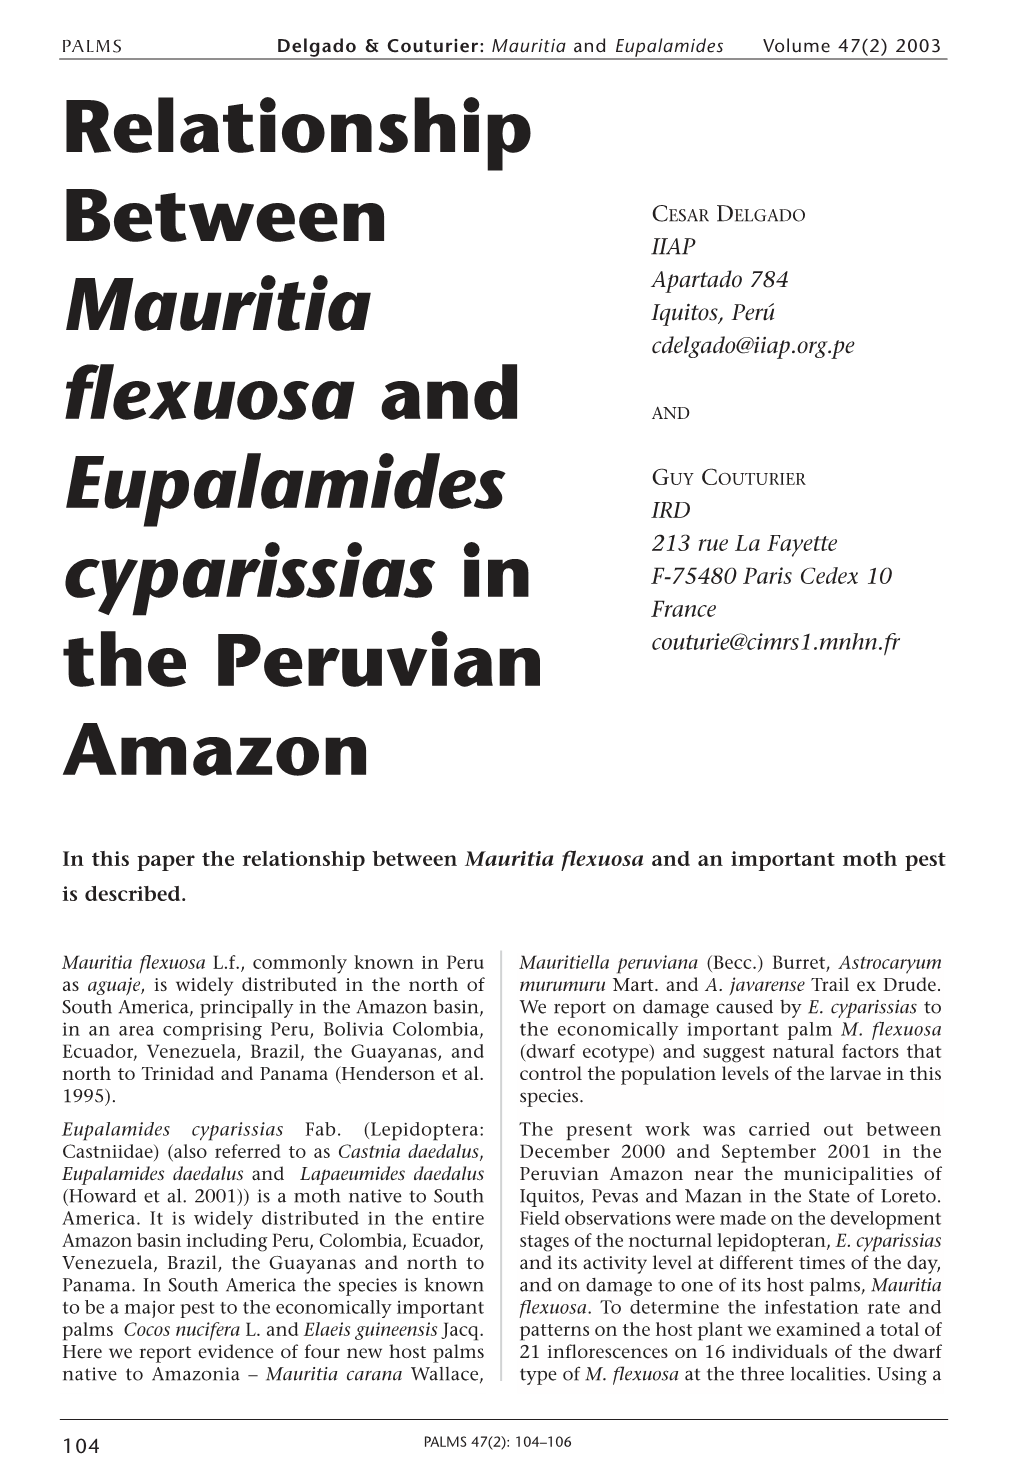 Relationship Between Mauritia Flexuosa and Eupalamides